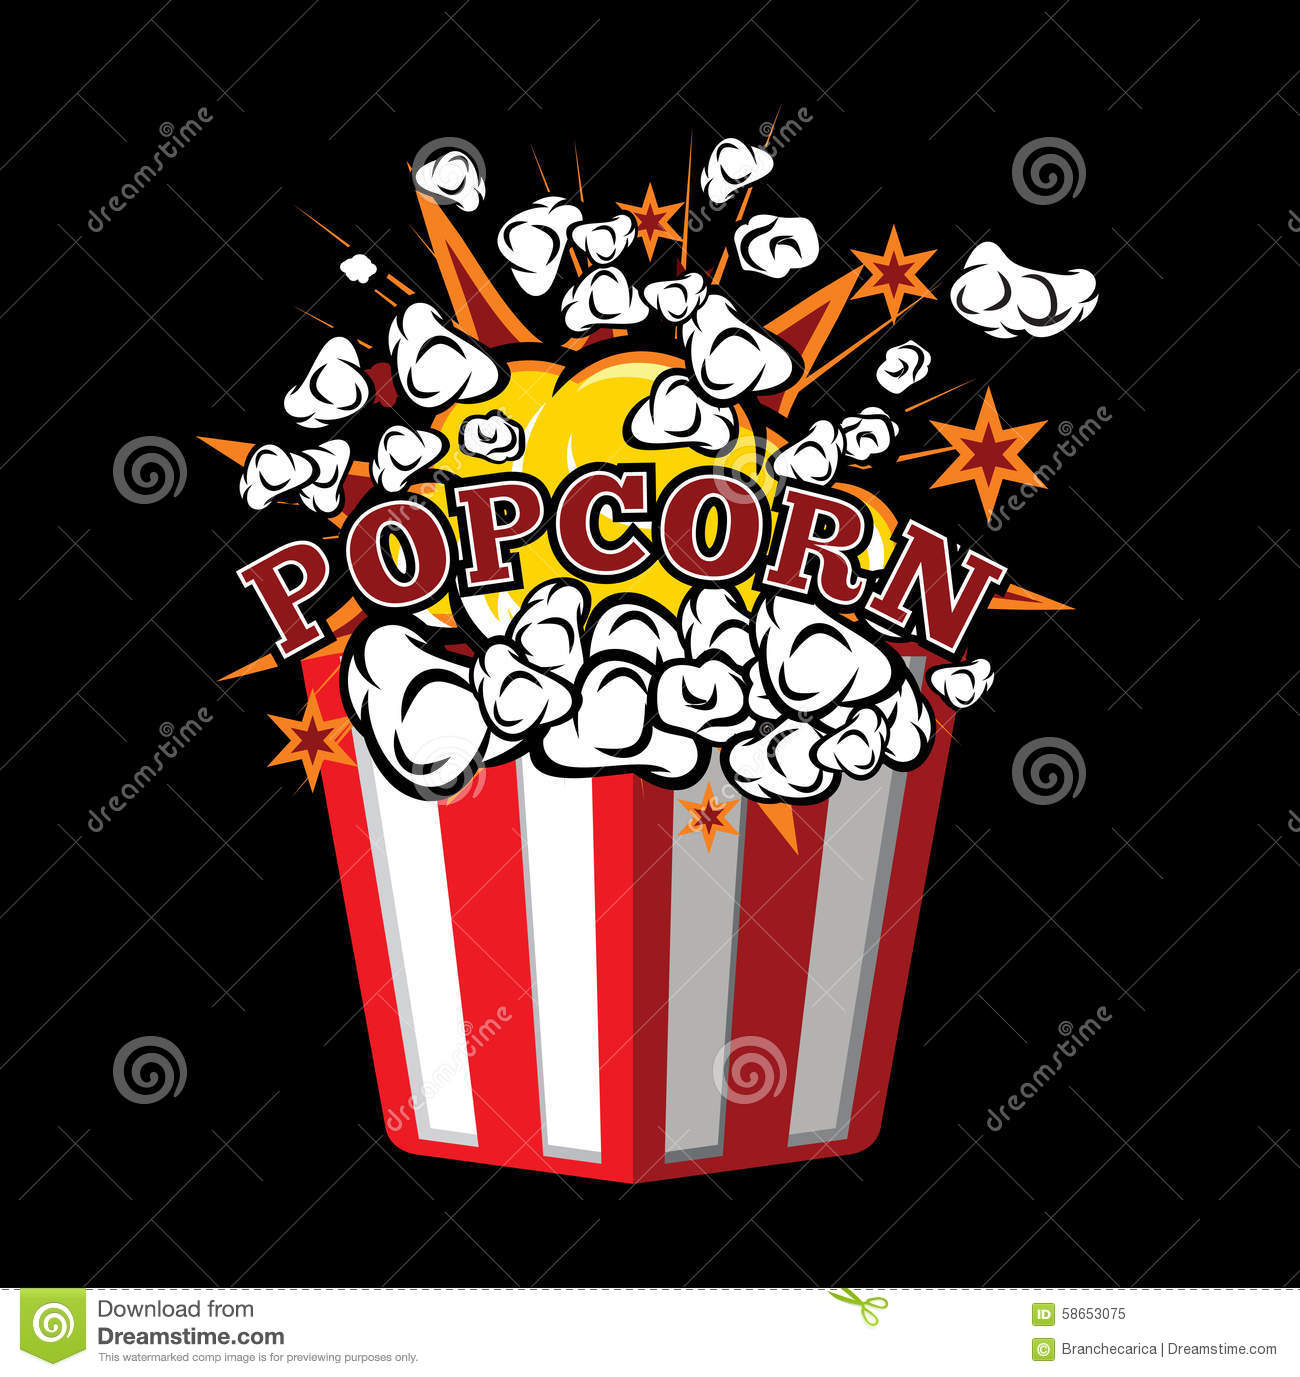 Vector Illustrations Of The Popcorn